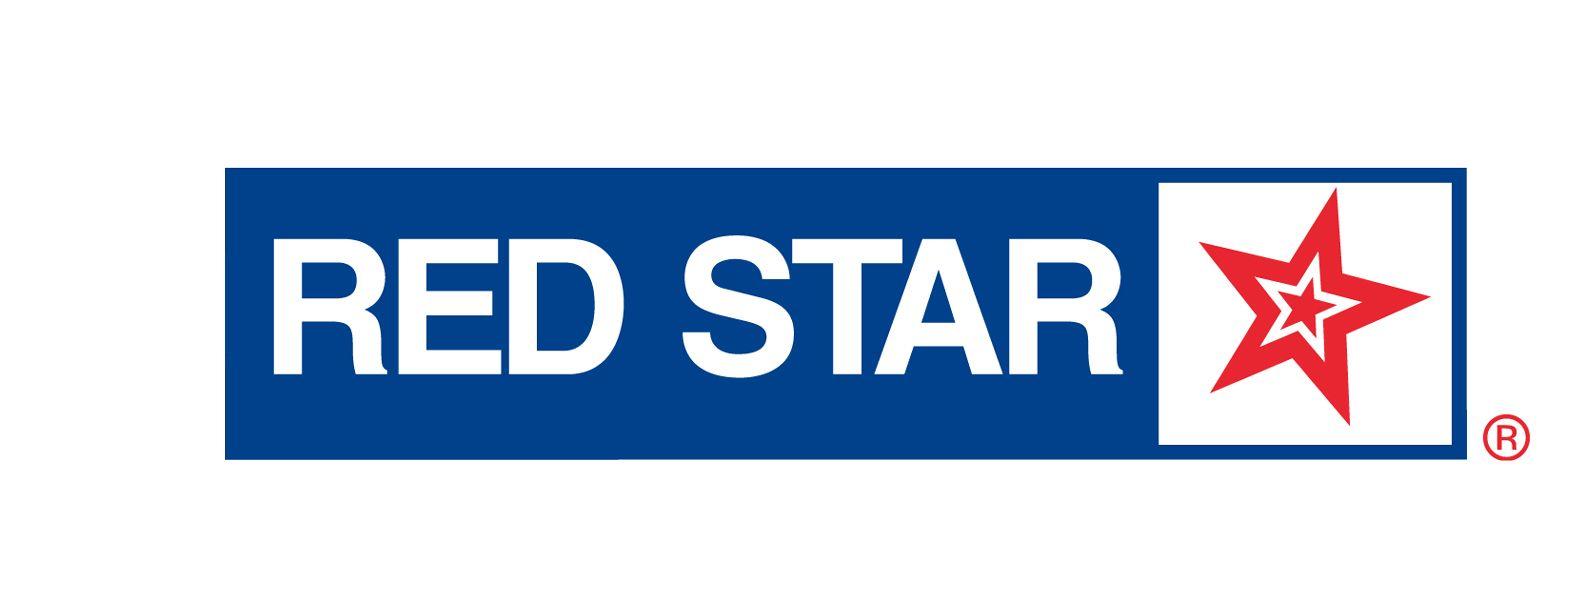 Red Star Yeast Logo - Red Star Yeast Logo